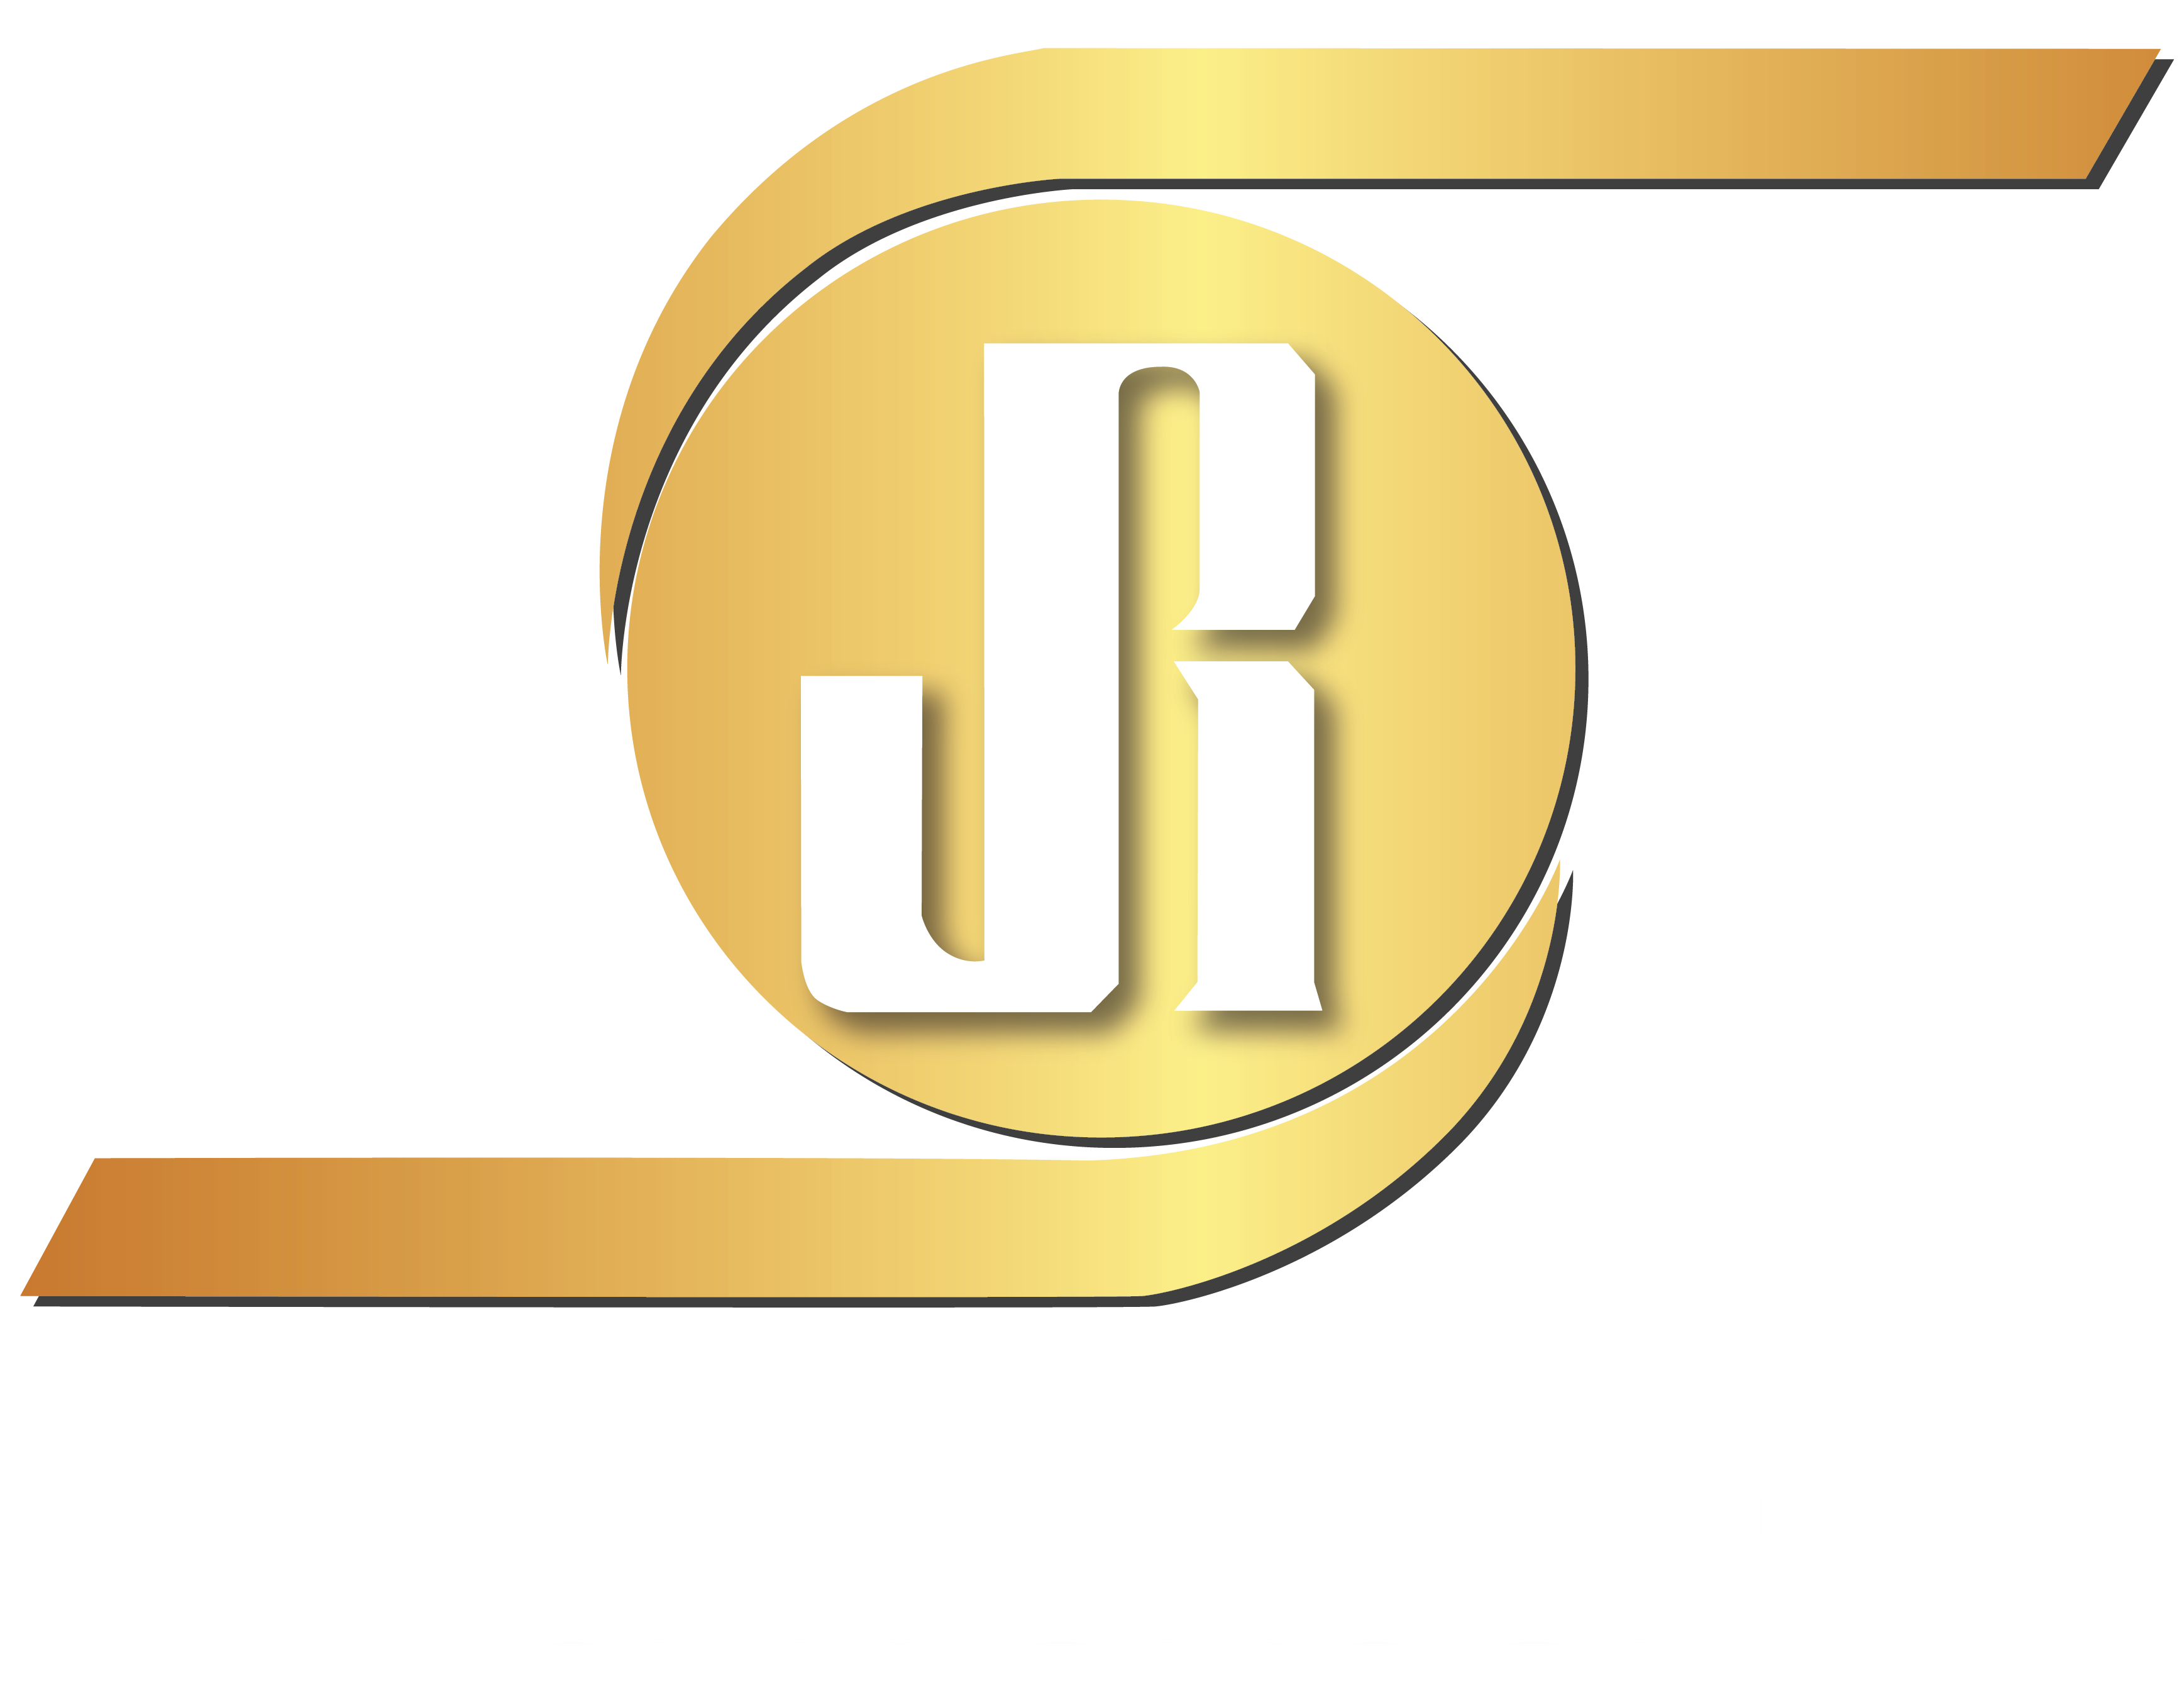 JPK Group